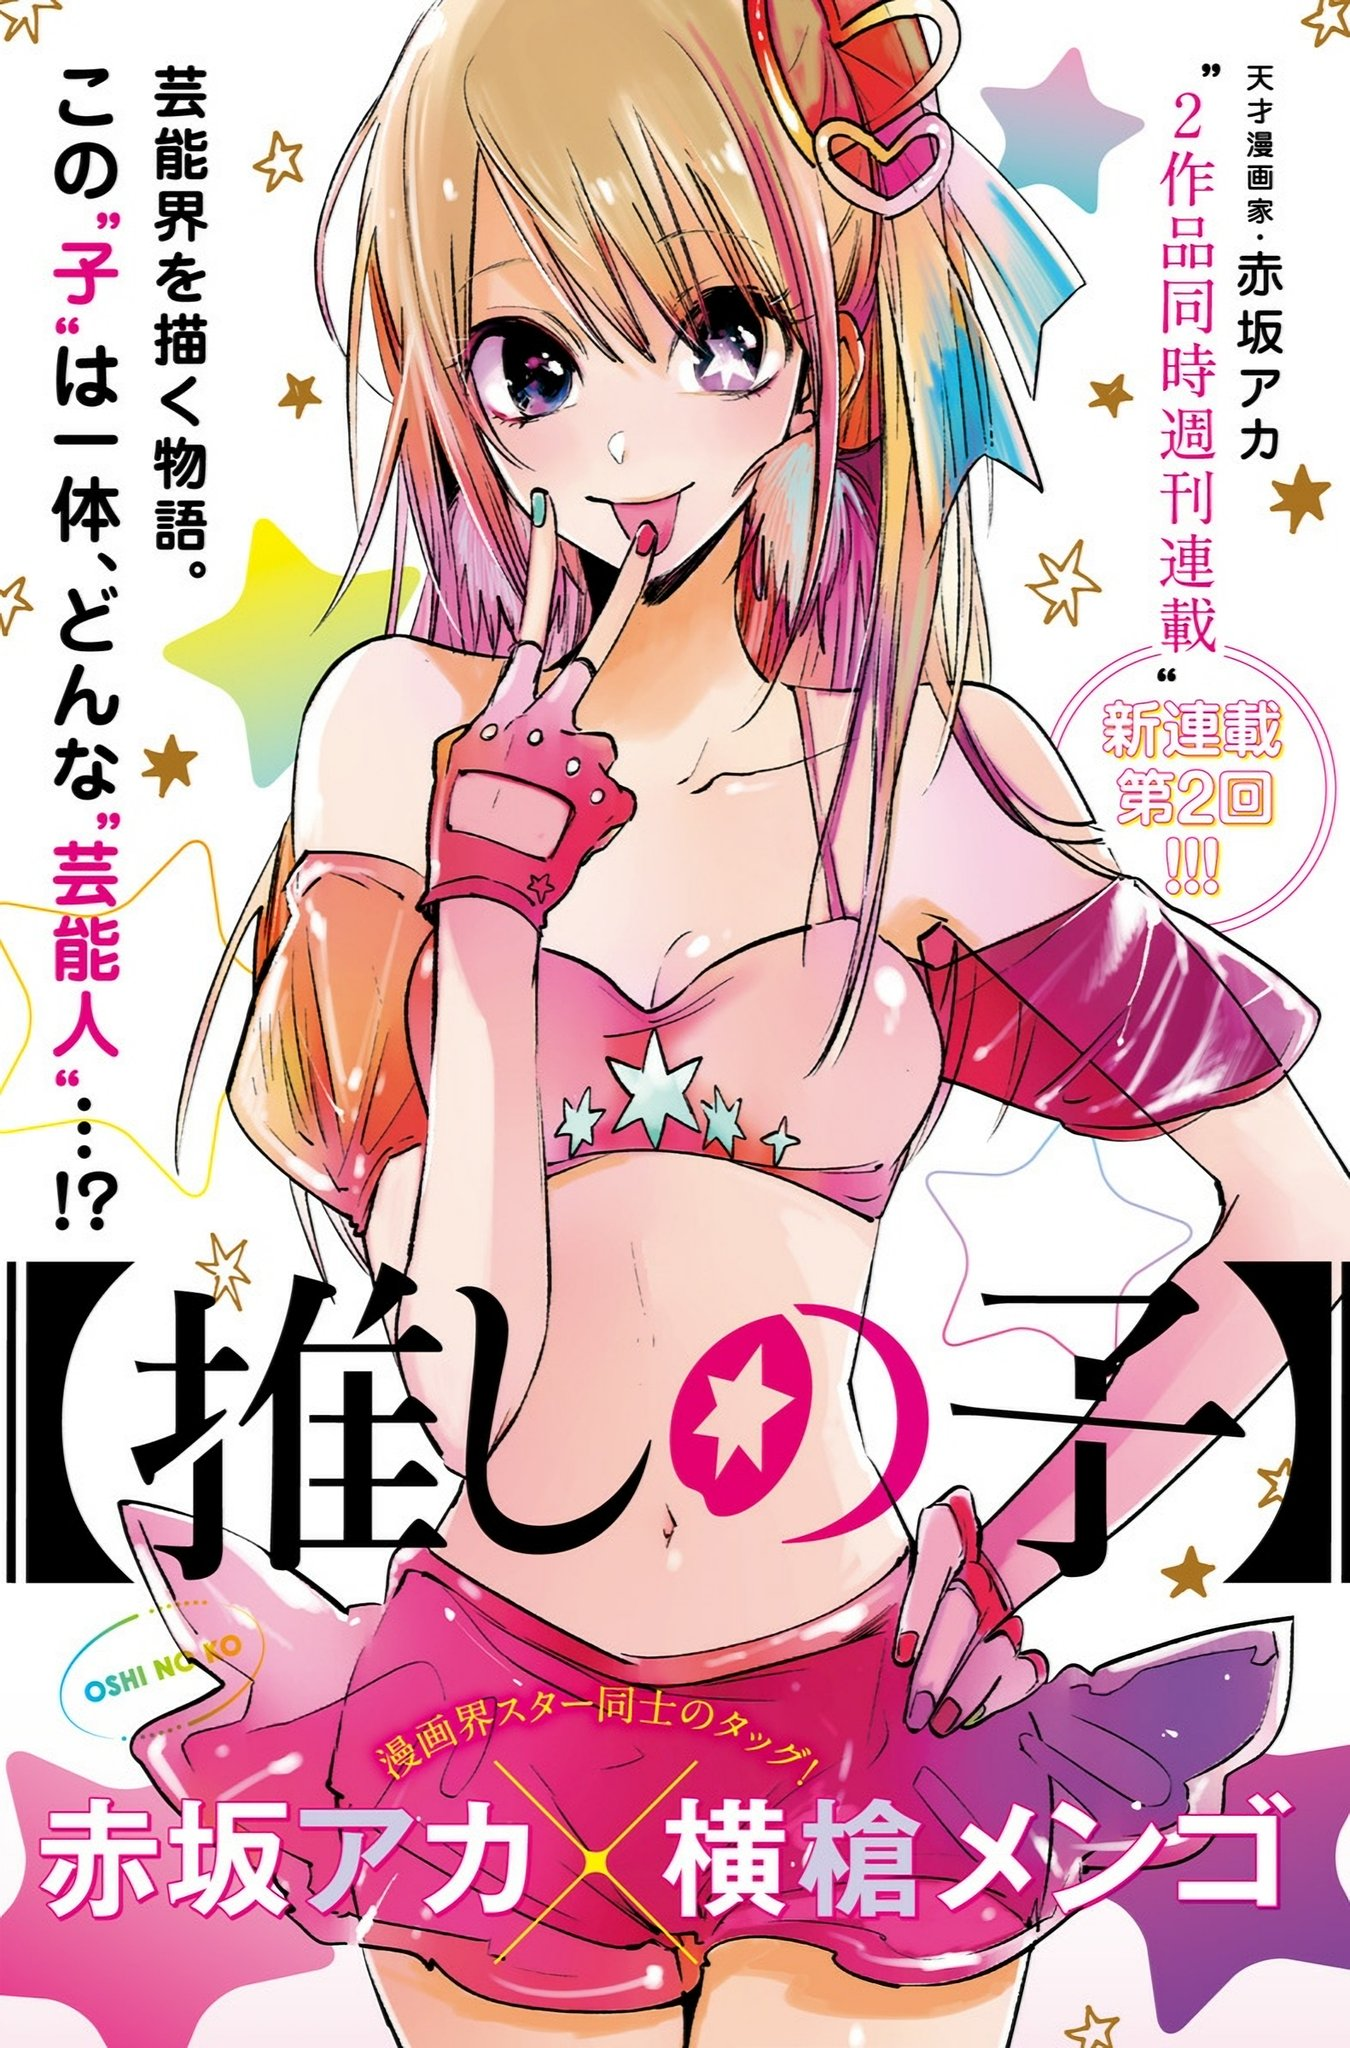 Oshi no Ko Capítulo 93 - Manga Online